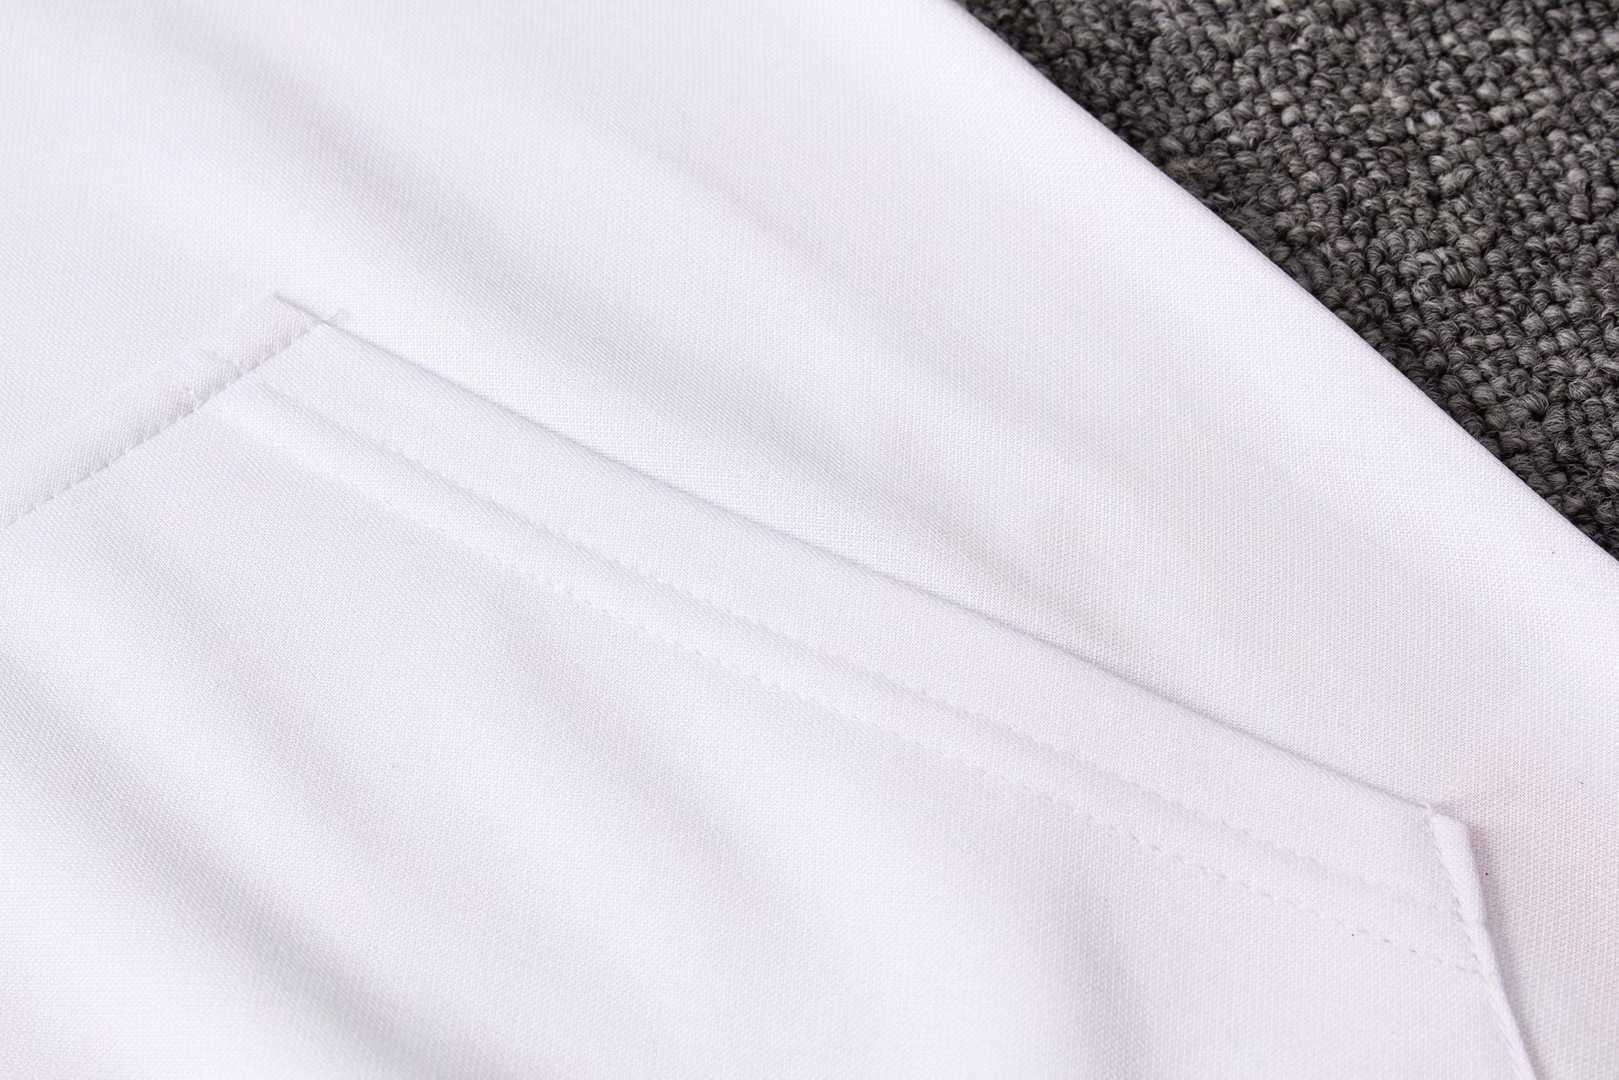 2019/20 Palmeiras Hoodie White Mens Soccer Training Suit(Jacket + Pants)